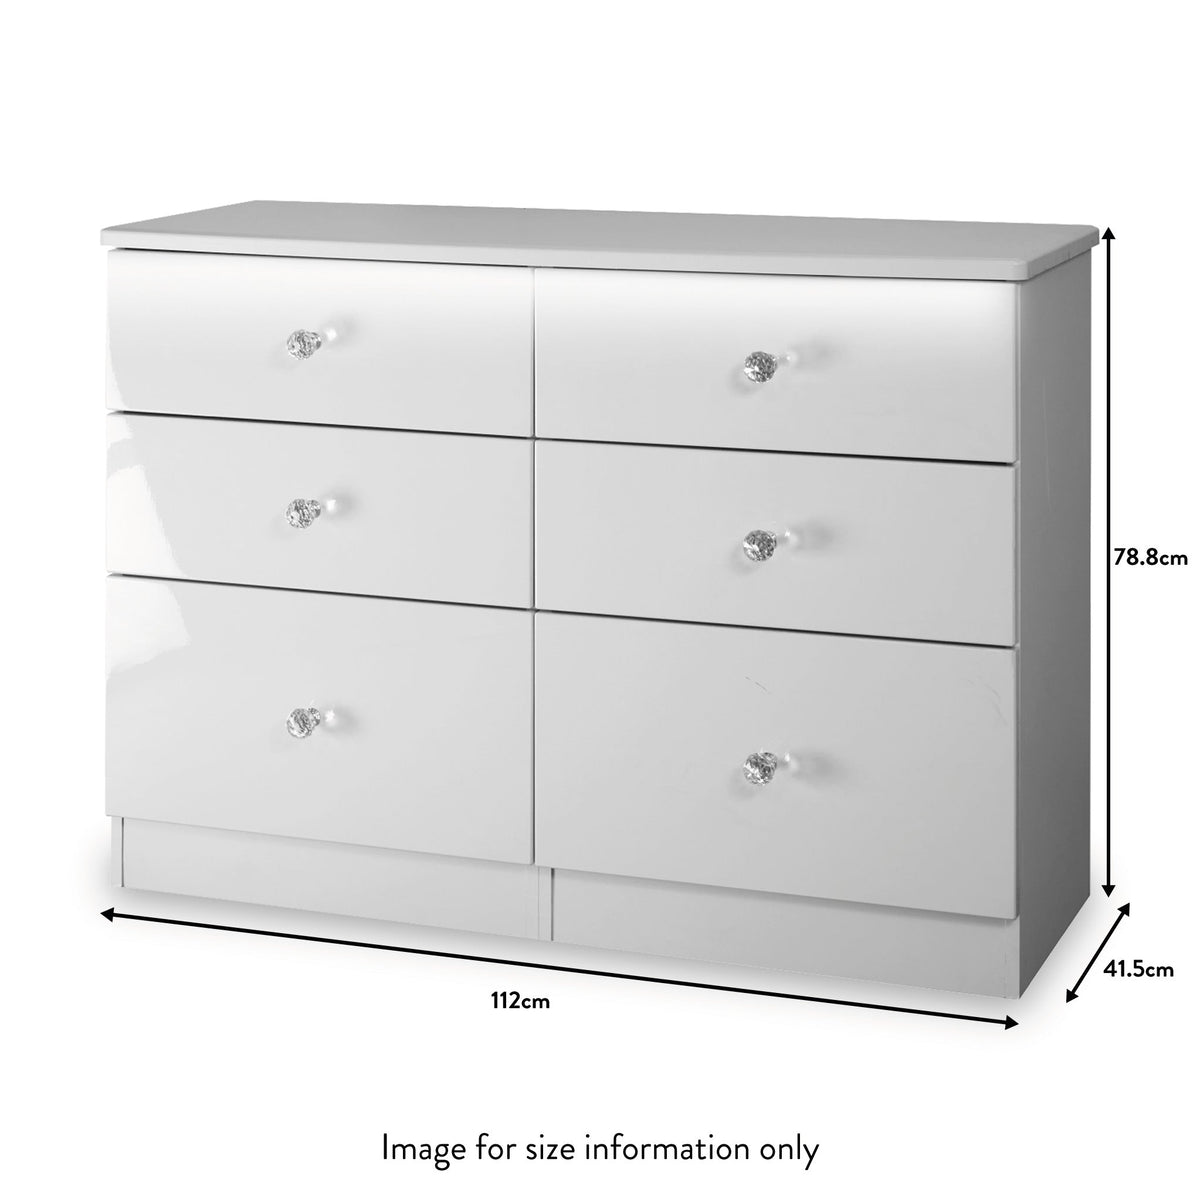 Aria white gloss LED lighting 6 drawer chest dimensions